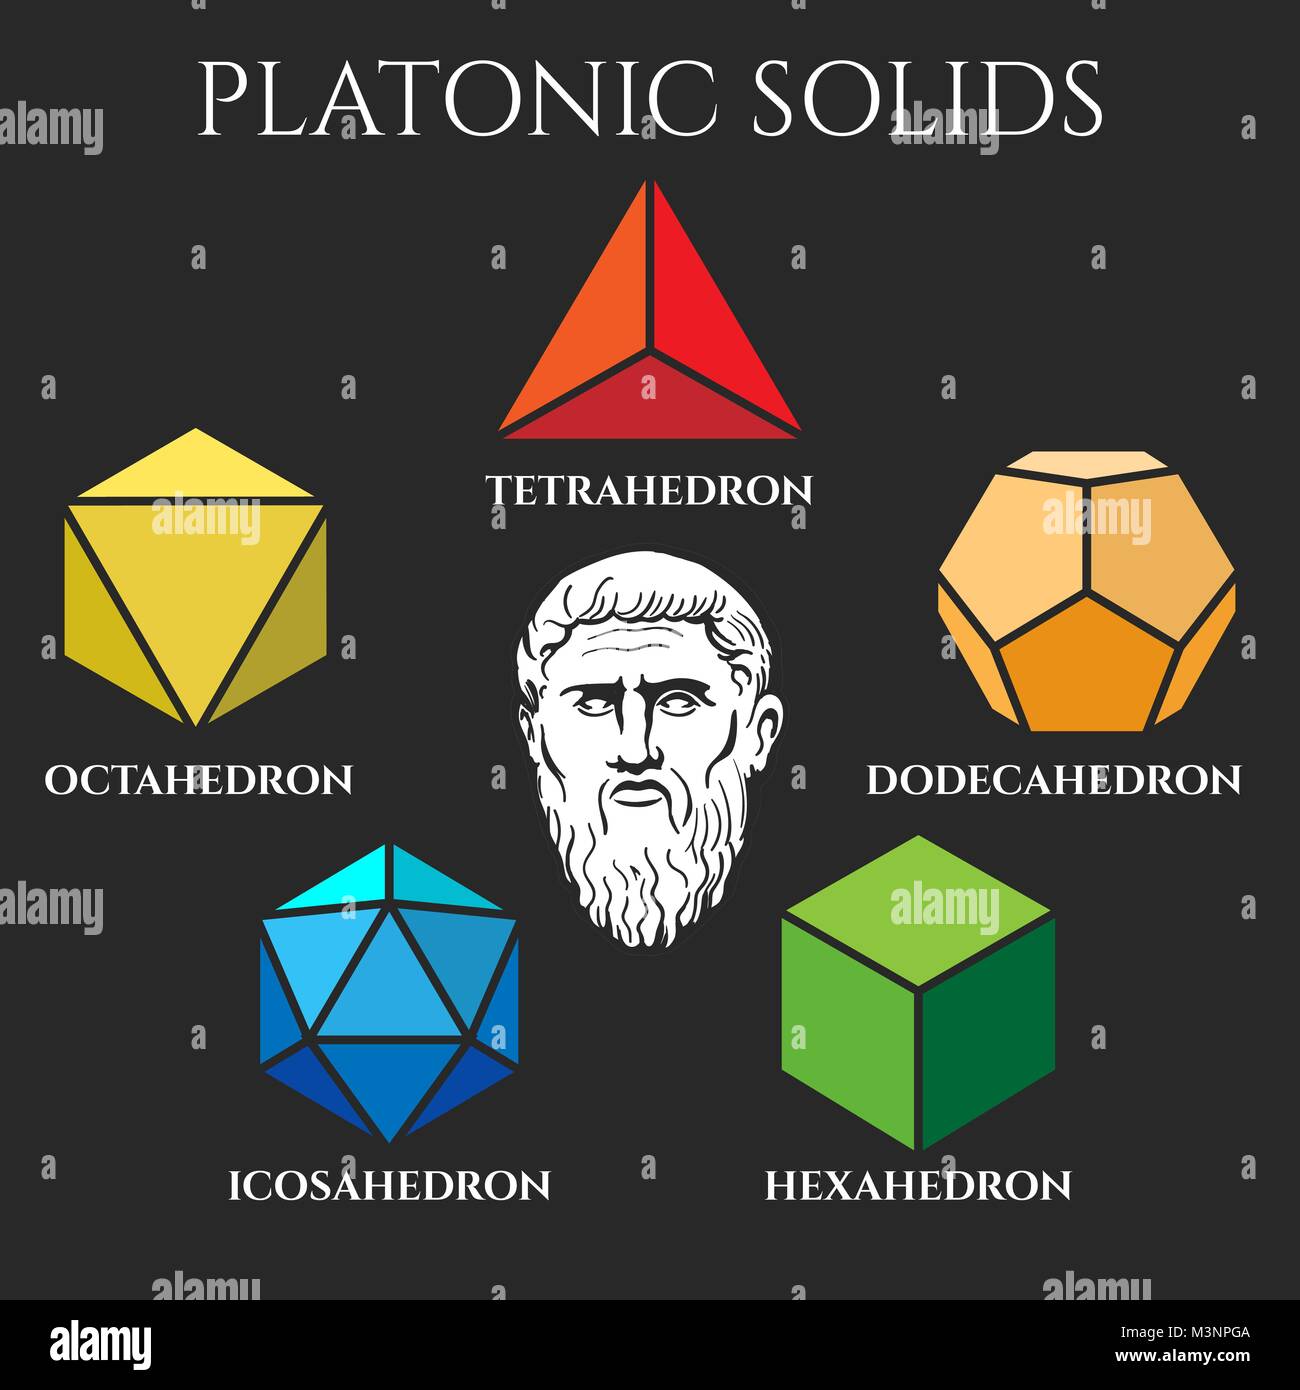 Platonic solids. Platon solid set like tetrahedron and dodecahedron, octahedron and icosahedron vector geometric forms Stock Vector